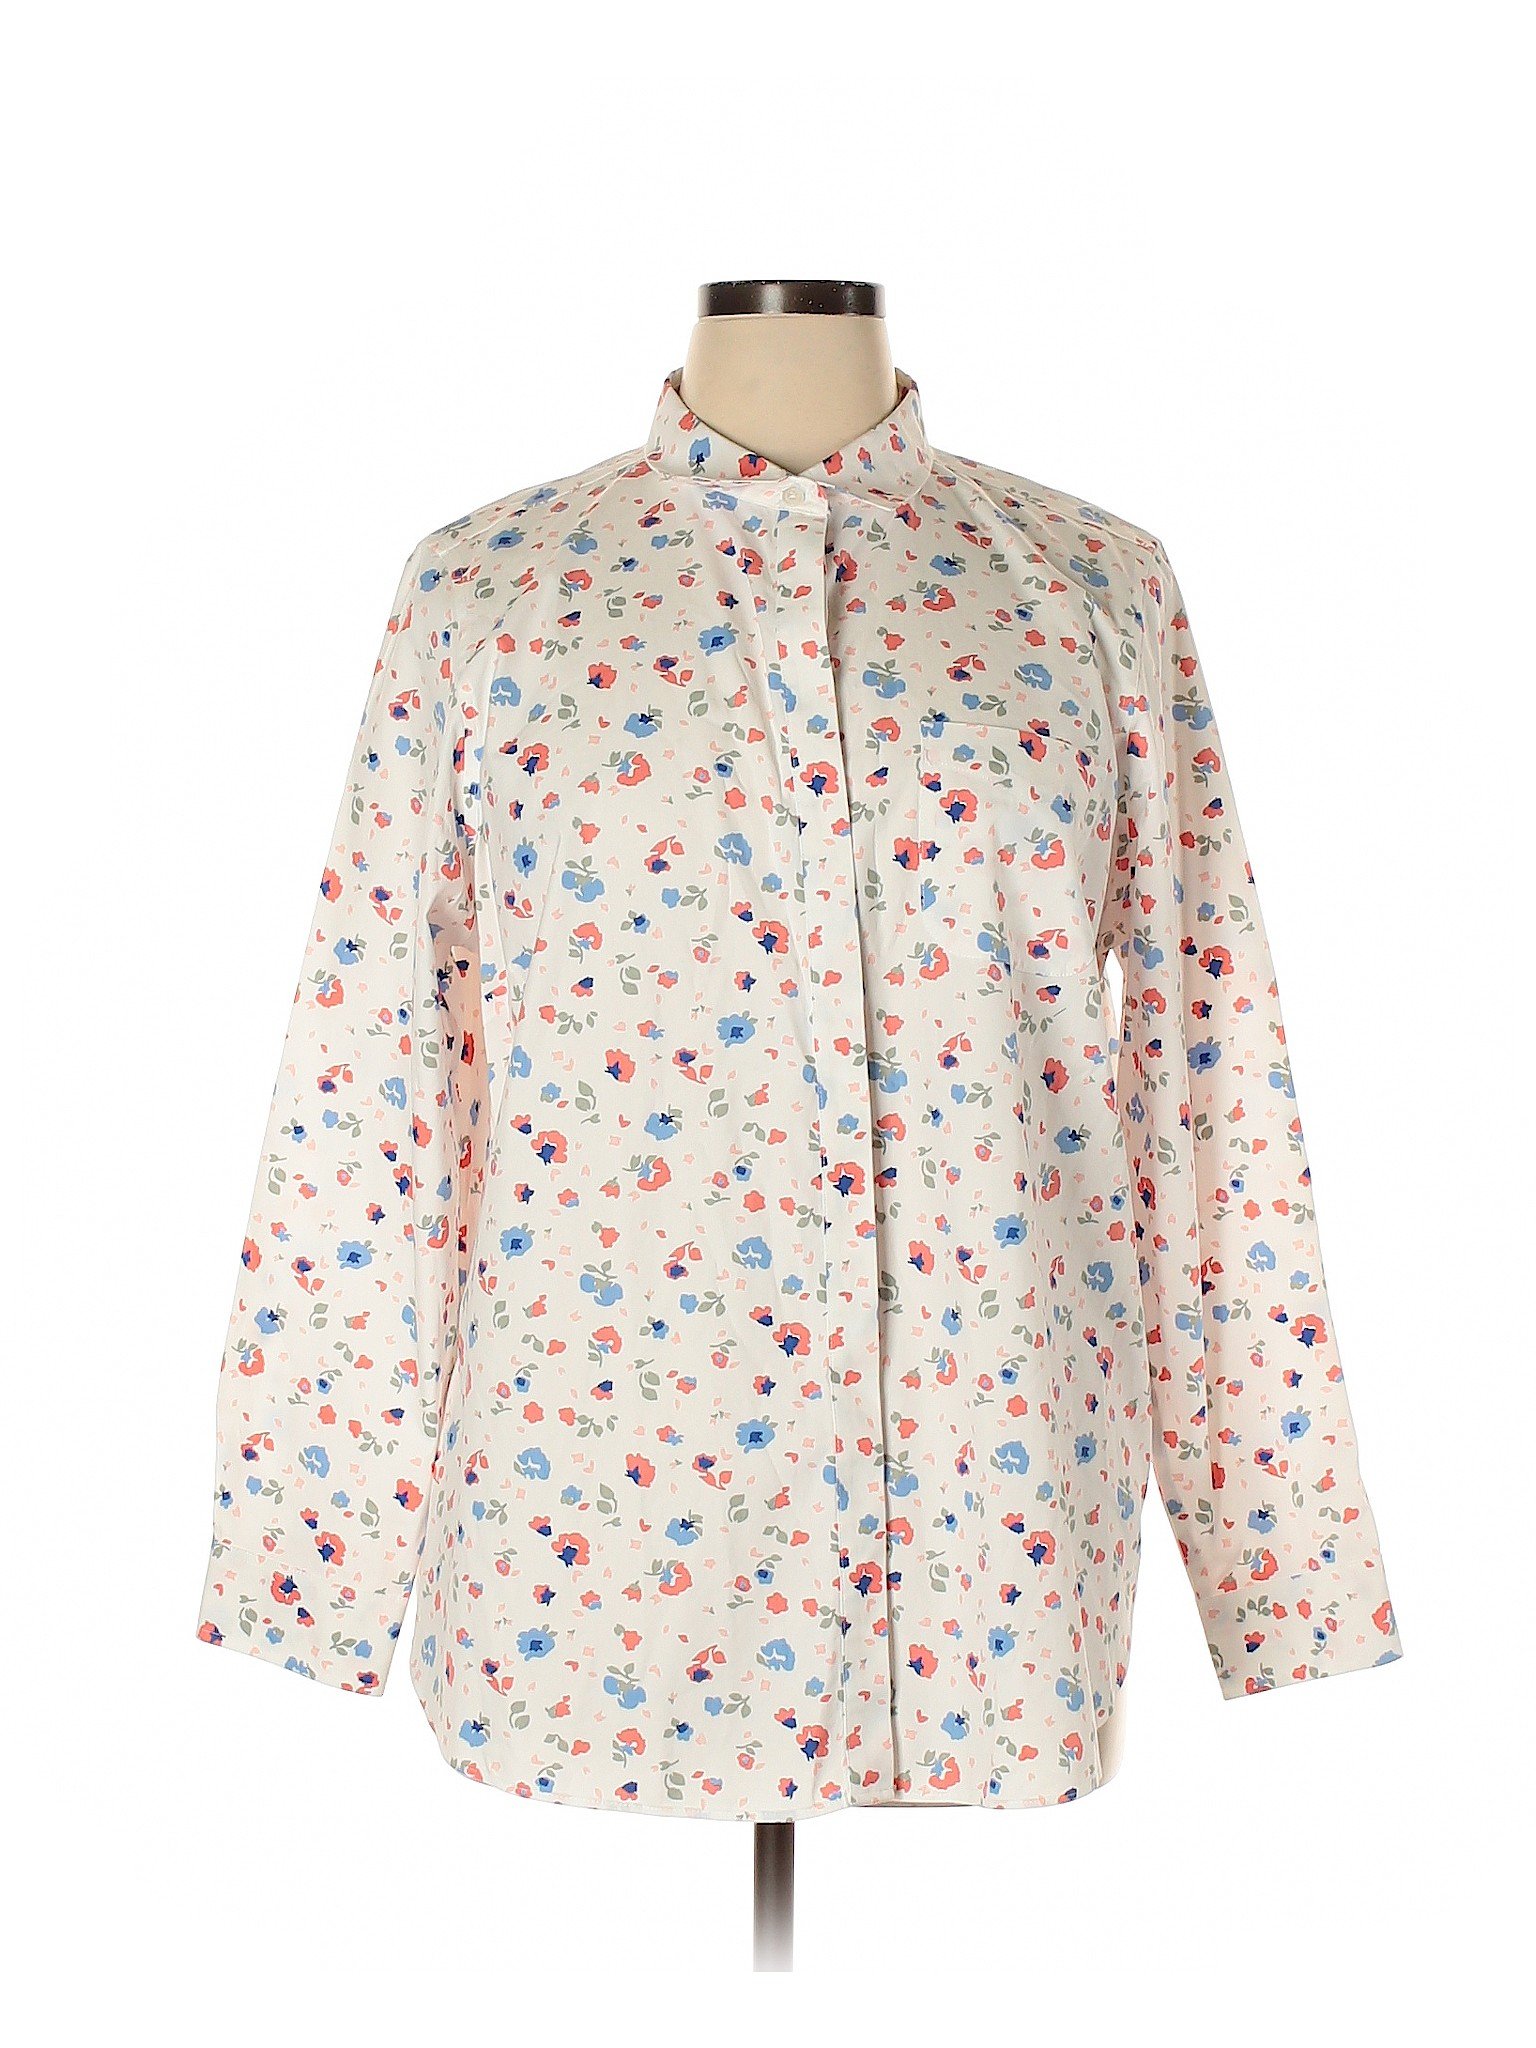 Details about L.L.Bean Women White Long Sleeve Button Down Shirt 1X Plus